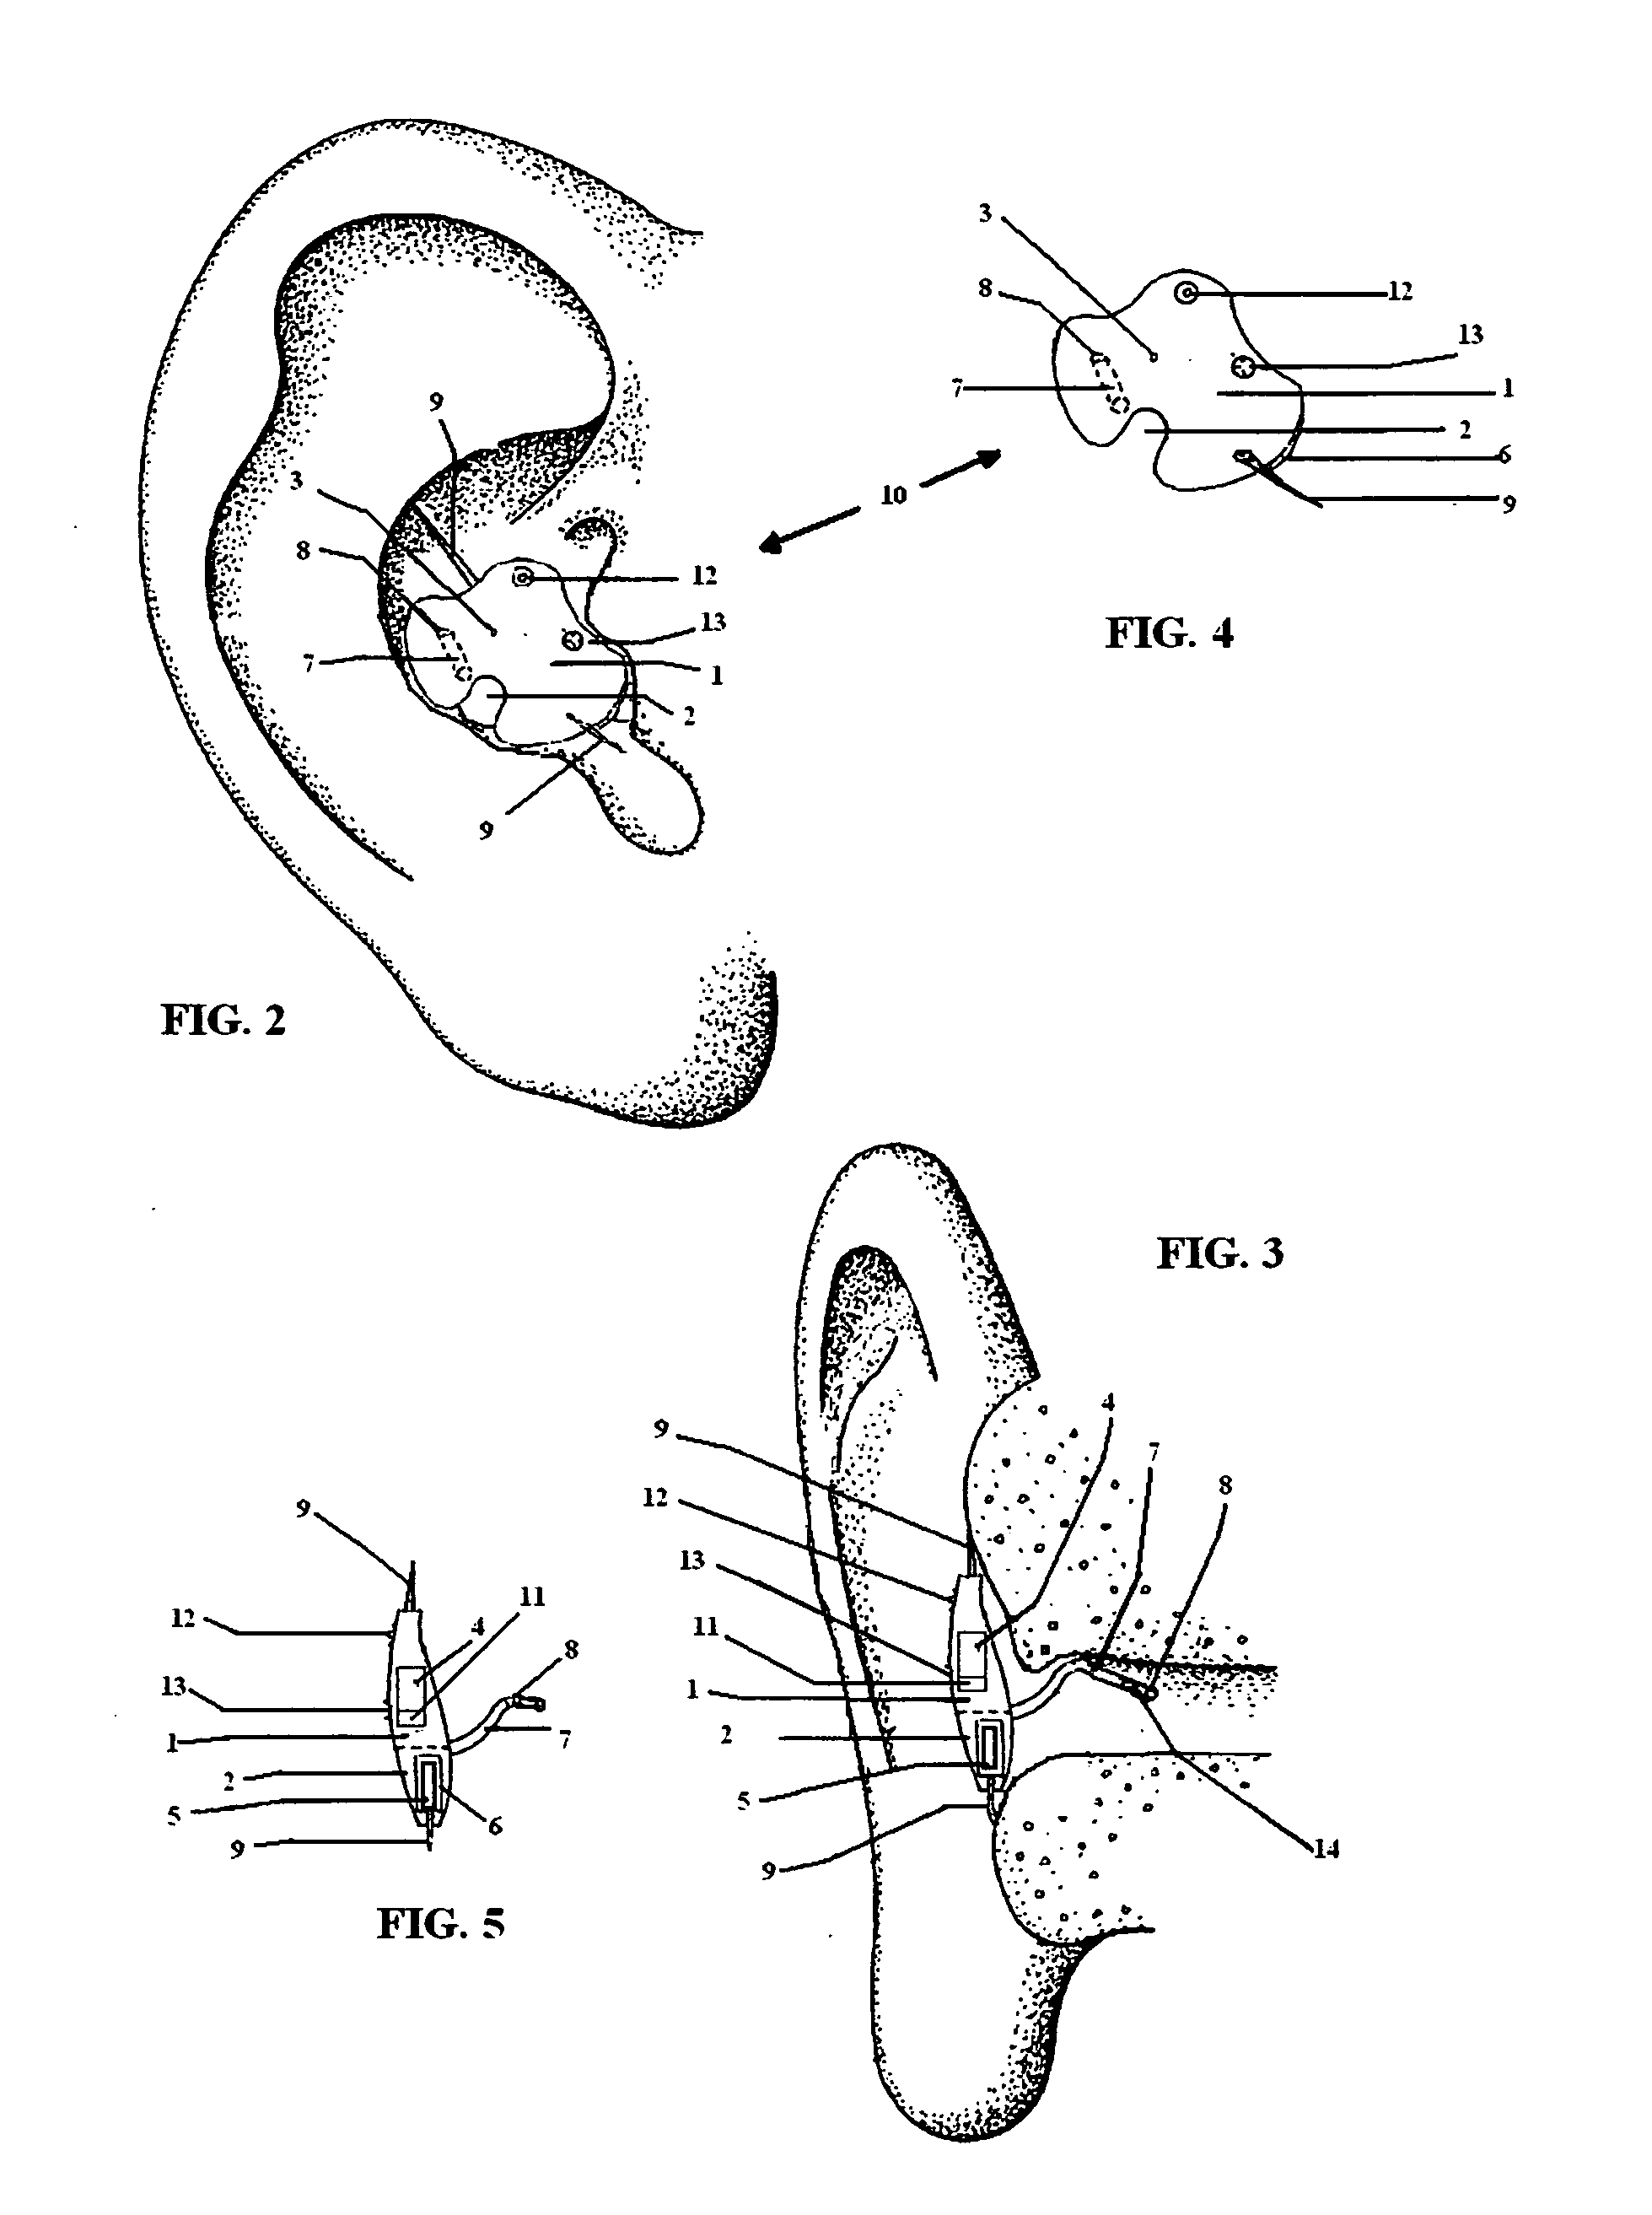 Concha bowl hearing aid apparatus and method